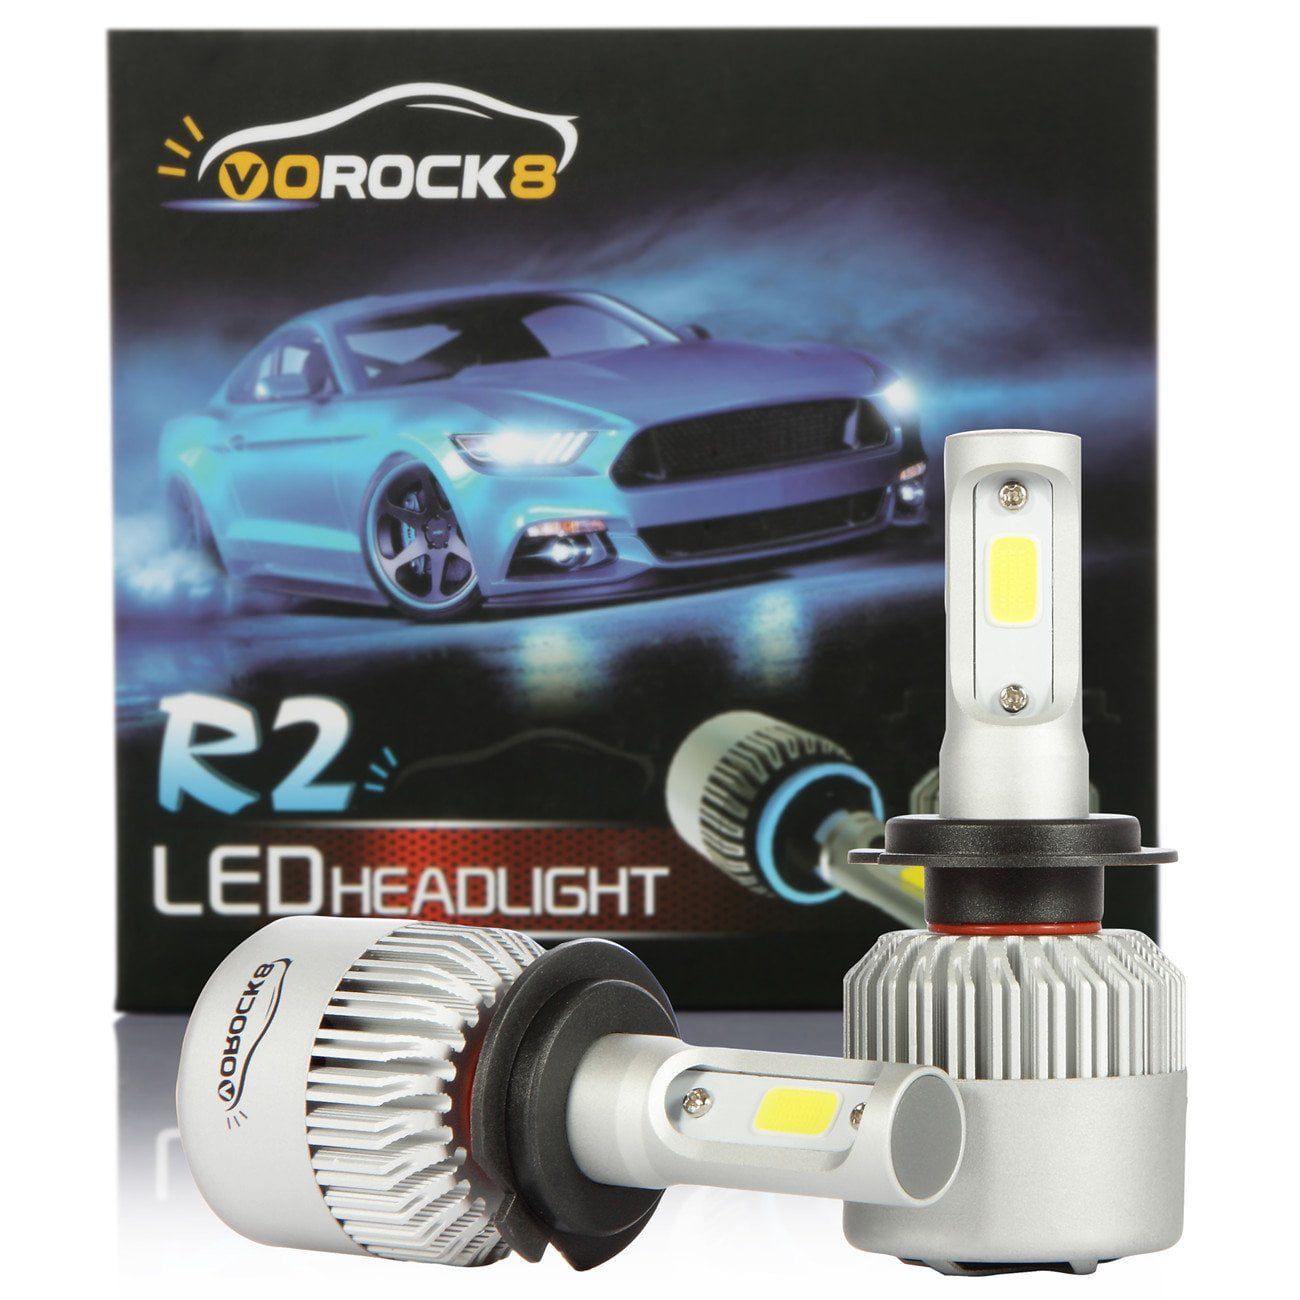 1 Pair VoRock8 R2 COB H13 9008 8000 Lumens Led Head Iight Conversion Kit Replace Halogen Bulbs for High Low Beam Bulbs Dual Beam 2 in 1 Bulbs 6500K Xenon White 